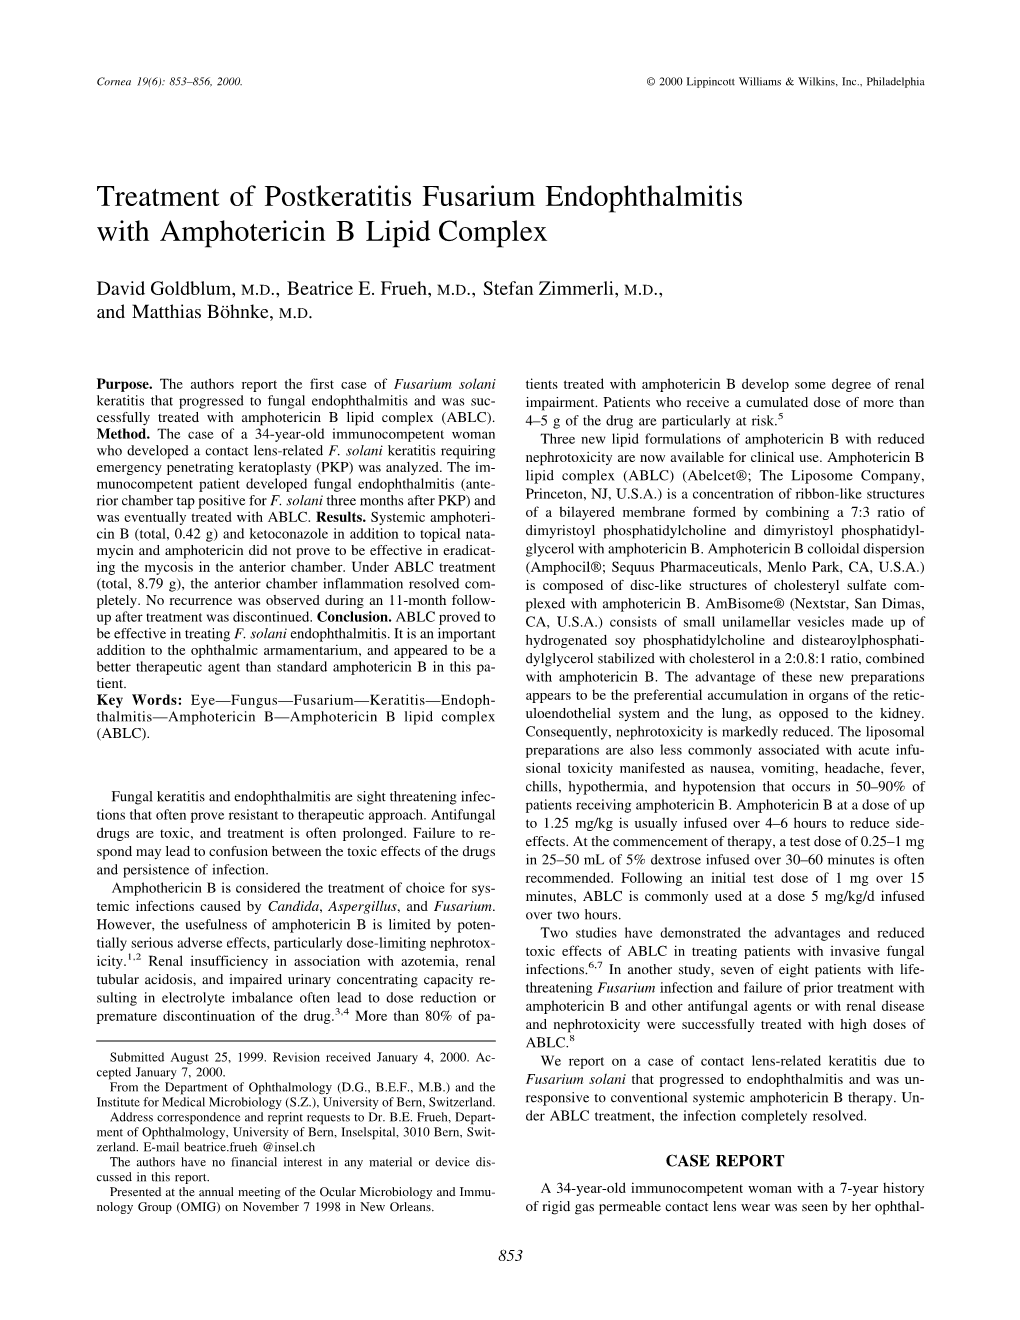 Treatment of Postkeratitis Fusarium Endophthalmitis with Amphotericin B Lipid Complex